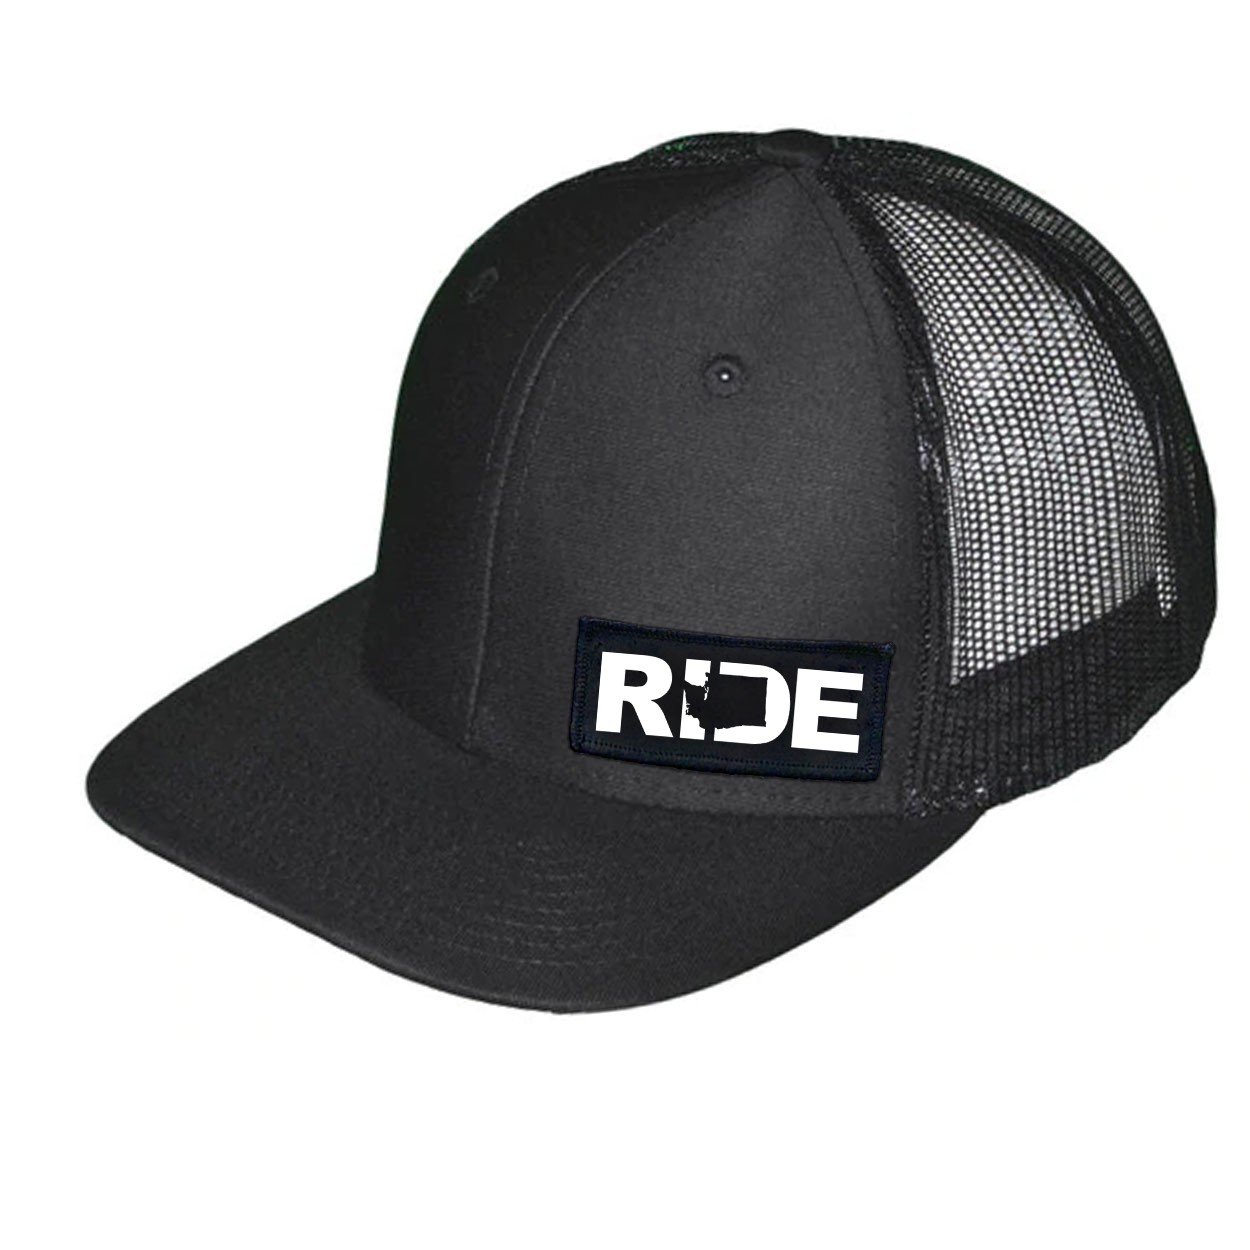 Ride Washington Night Out Woven Patch Snapback Trucker Hat Black (White Logo)